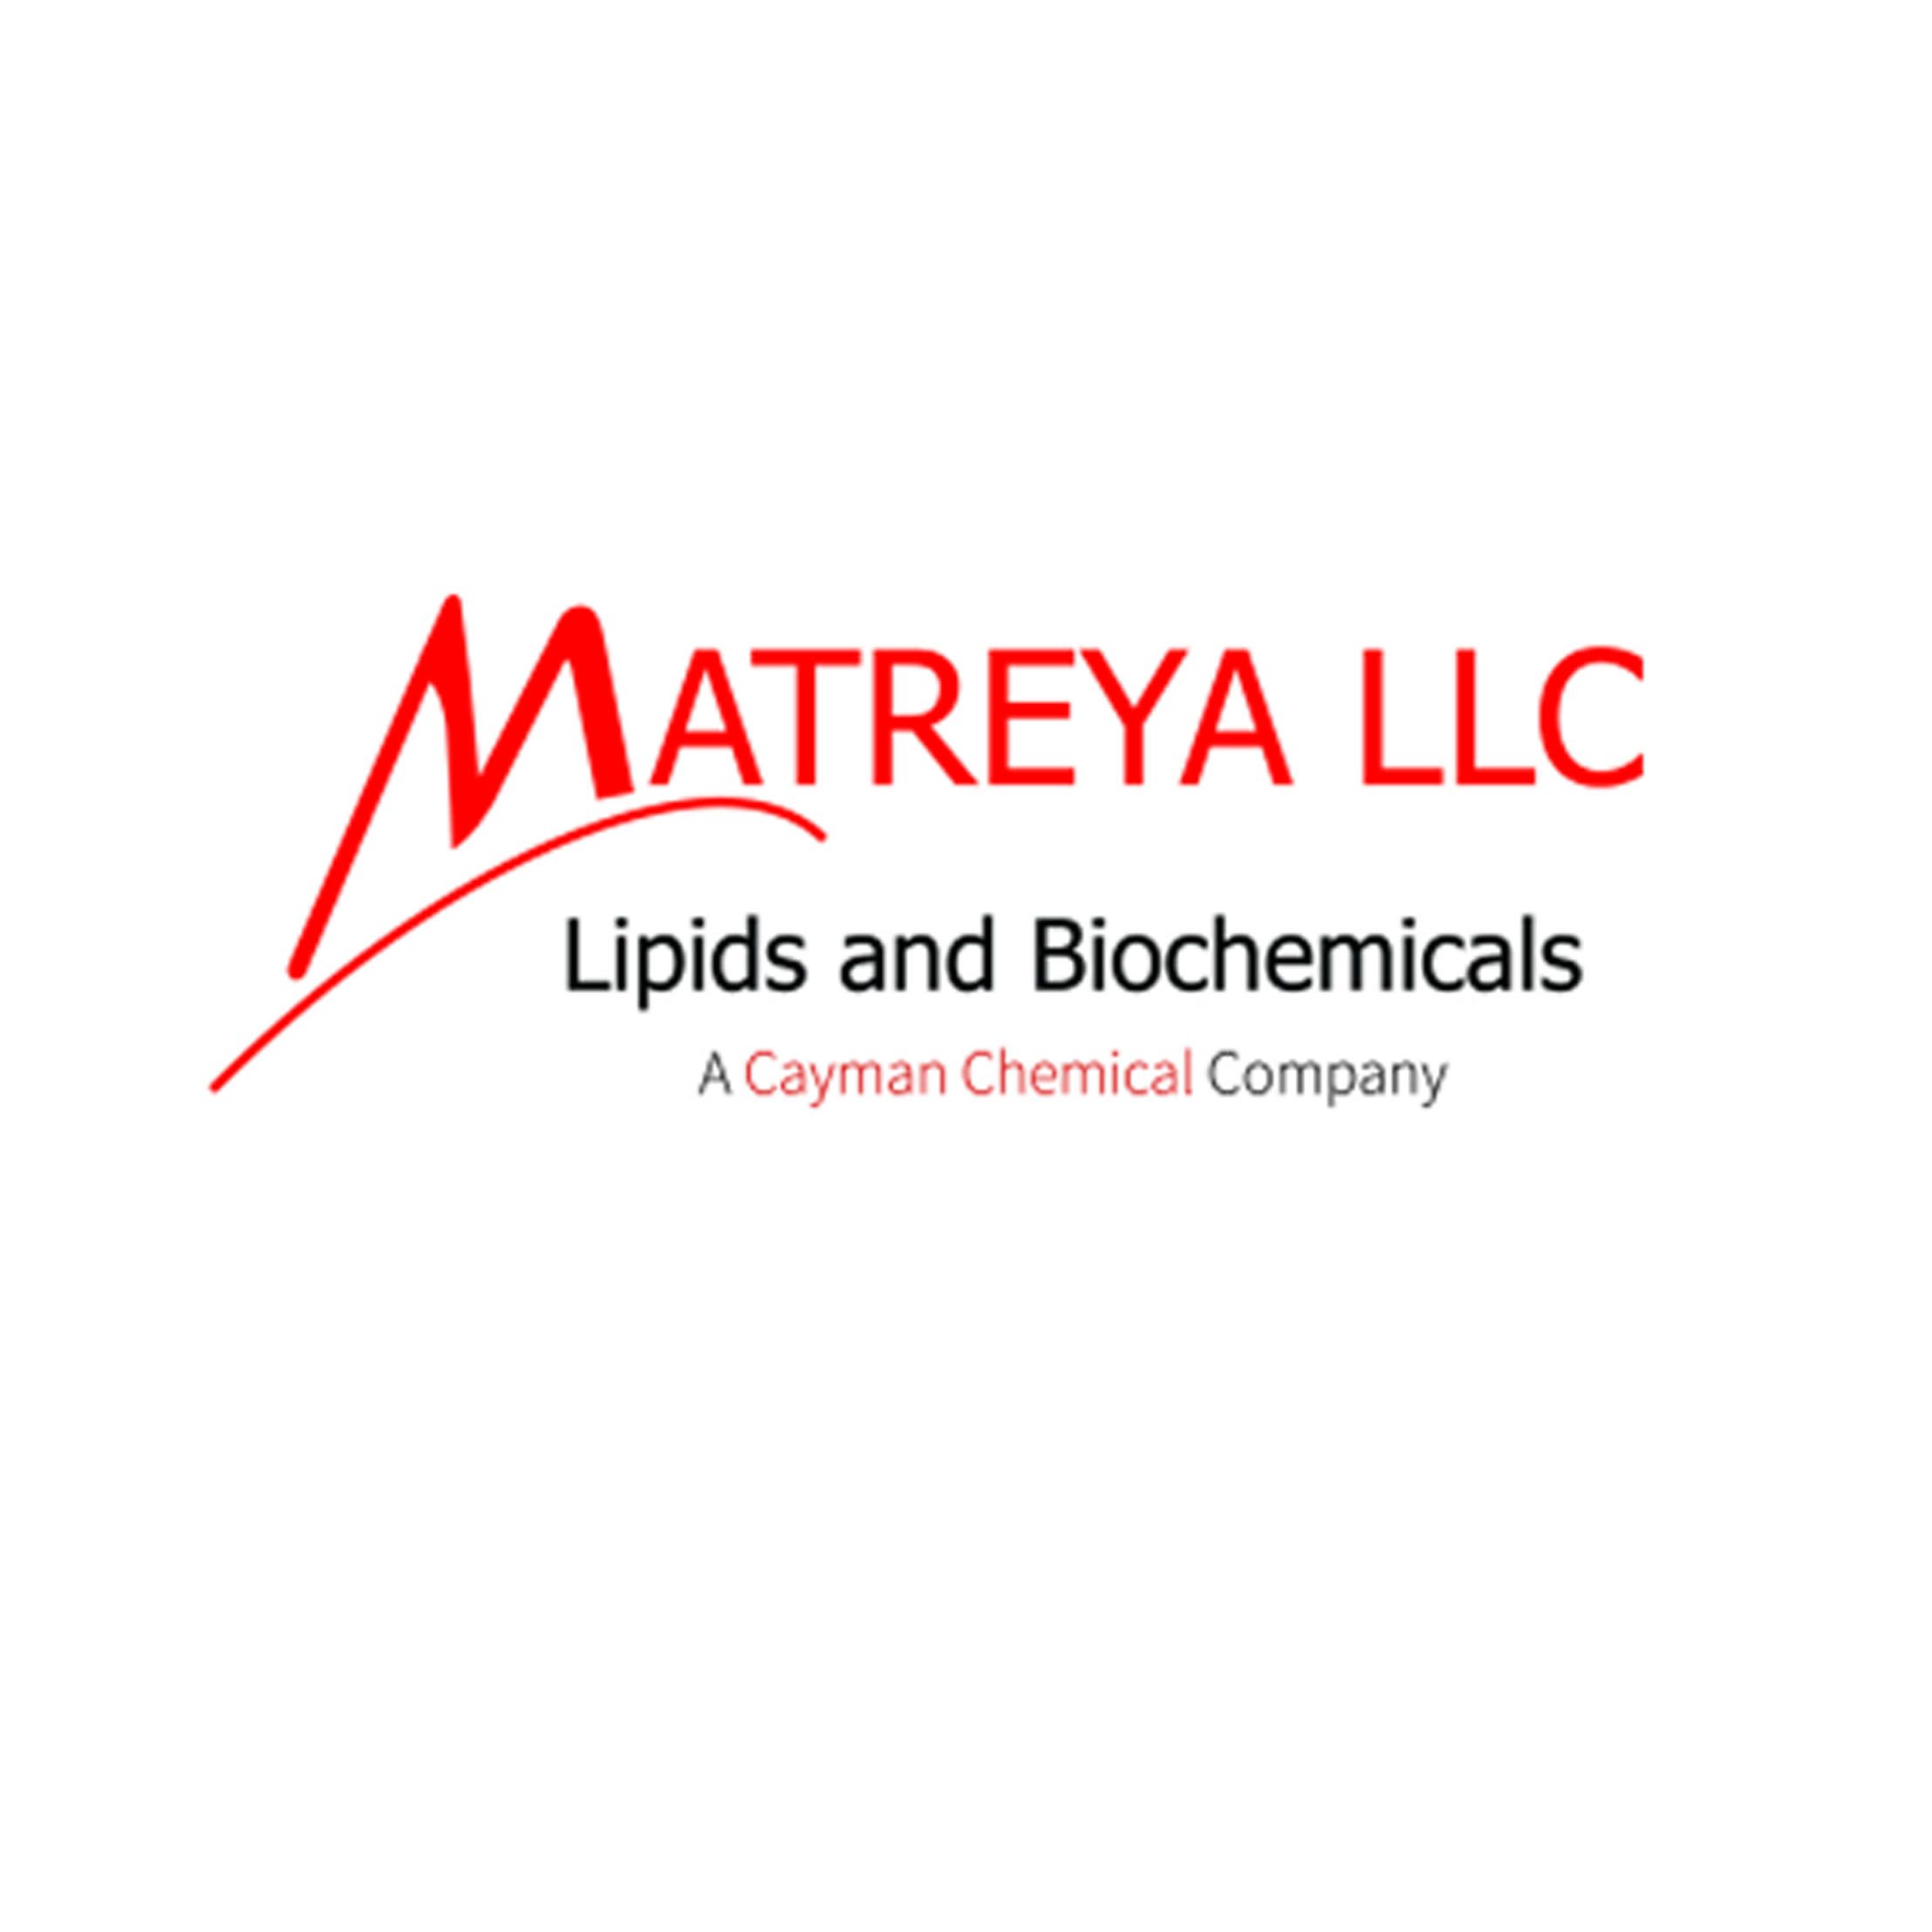 Matreya LLC高纯度鞘氨醇、神经酰胺、硫酸酯、神经节苷脂、酶抑制剂、生育酚和生育三烯酚